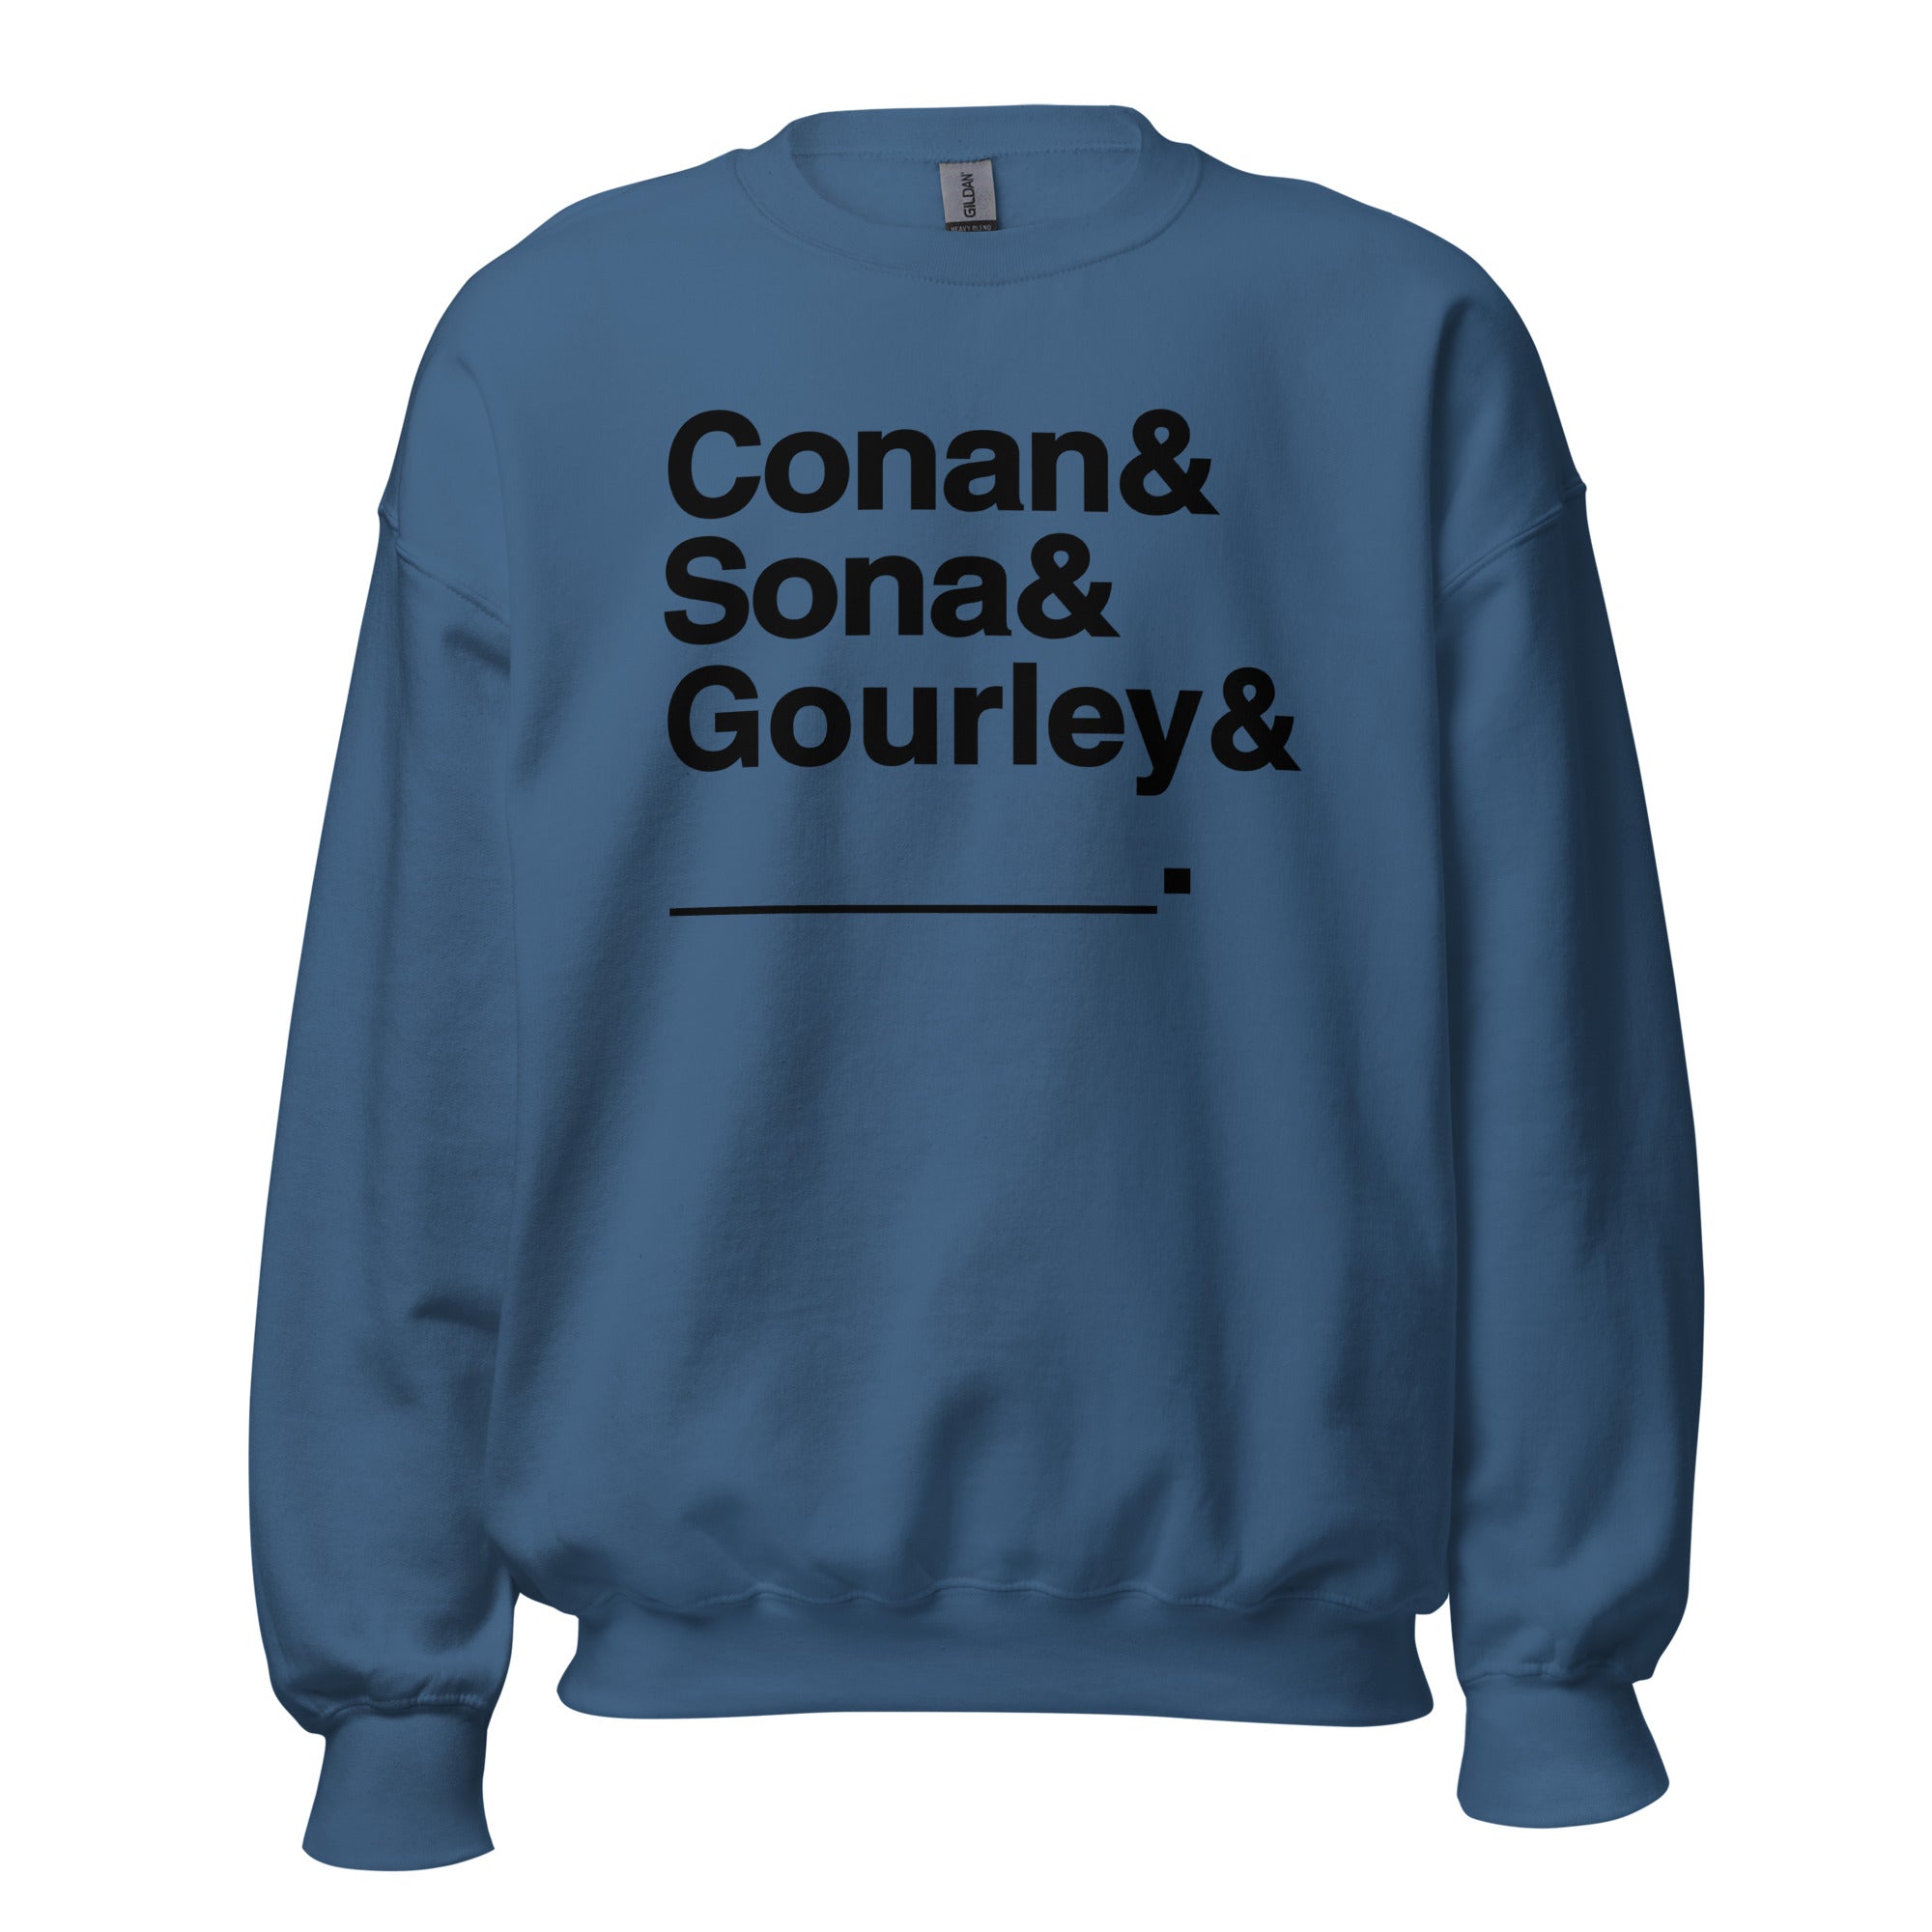 Conan O'Brien Needs A Friend: Conan & Sona & Gourley & You Sweatshirt (White/Blue)